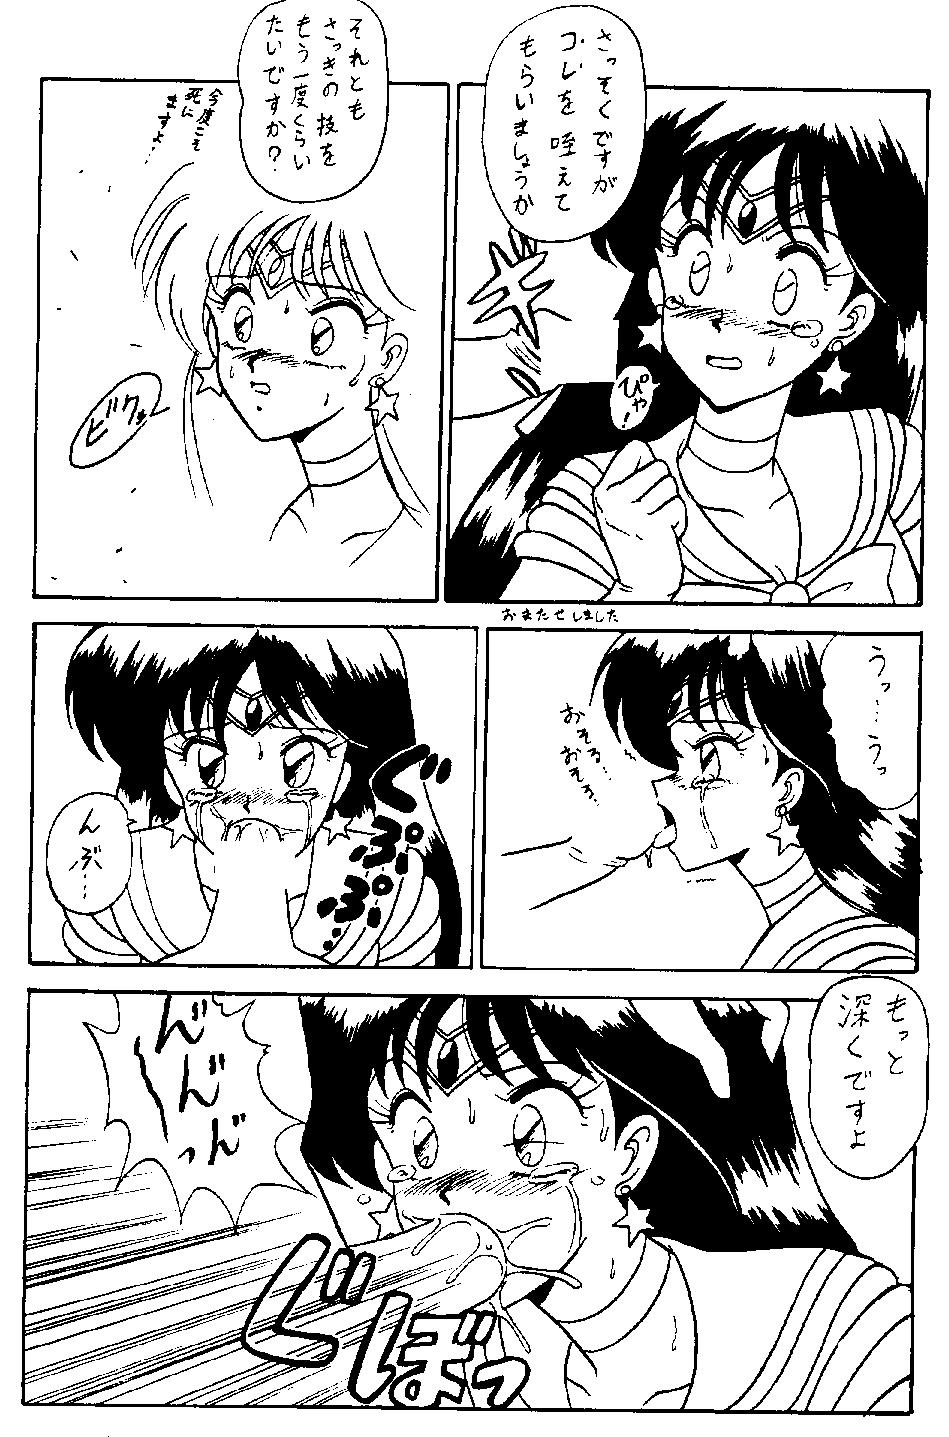 Hot Mom mitca - Sailor moon Pelada - Page 6